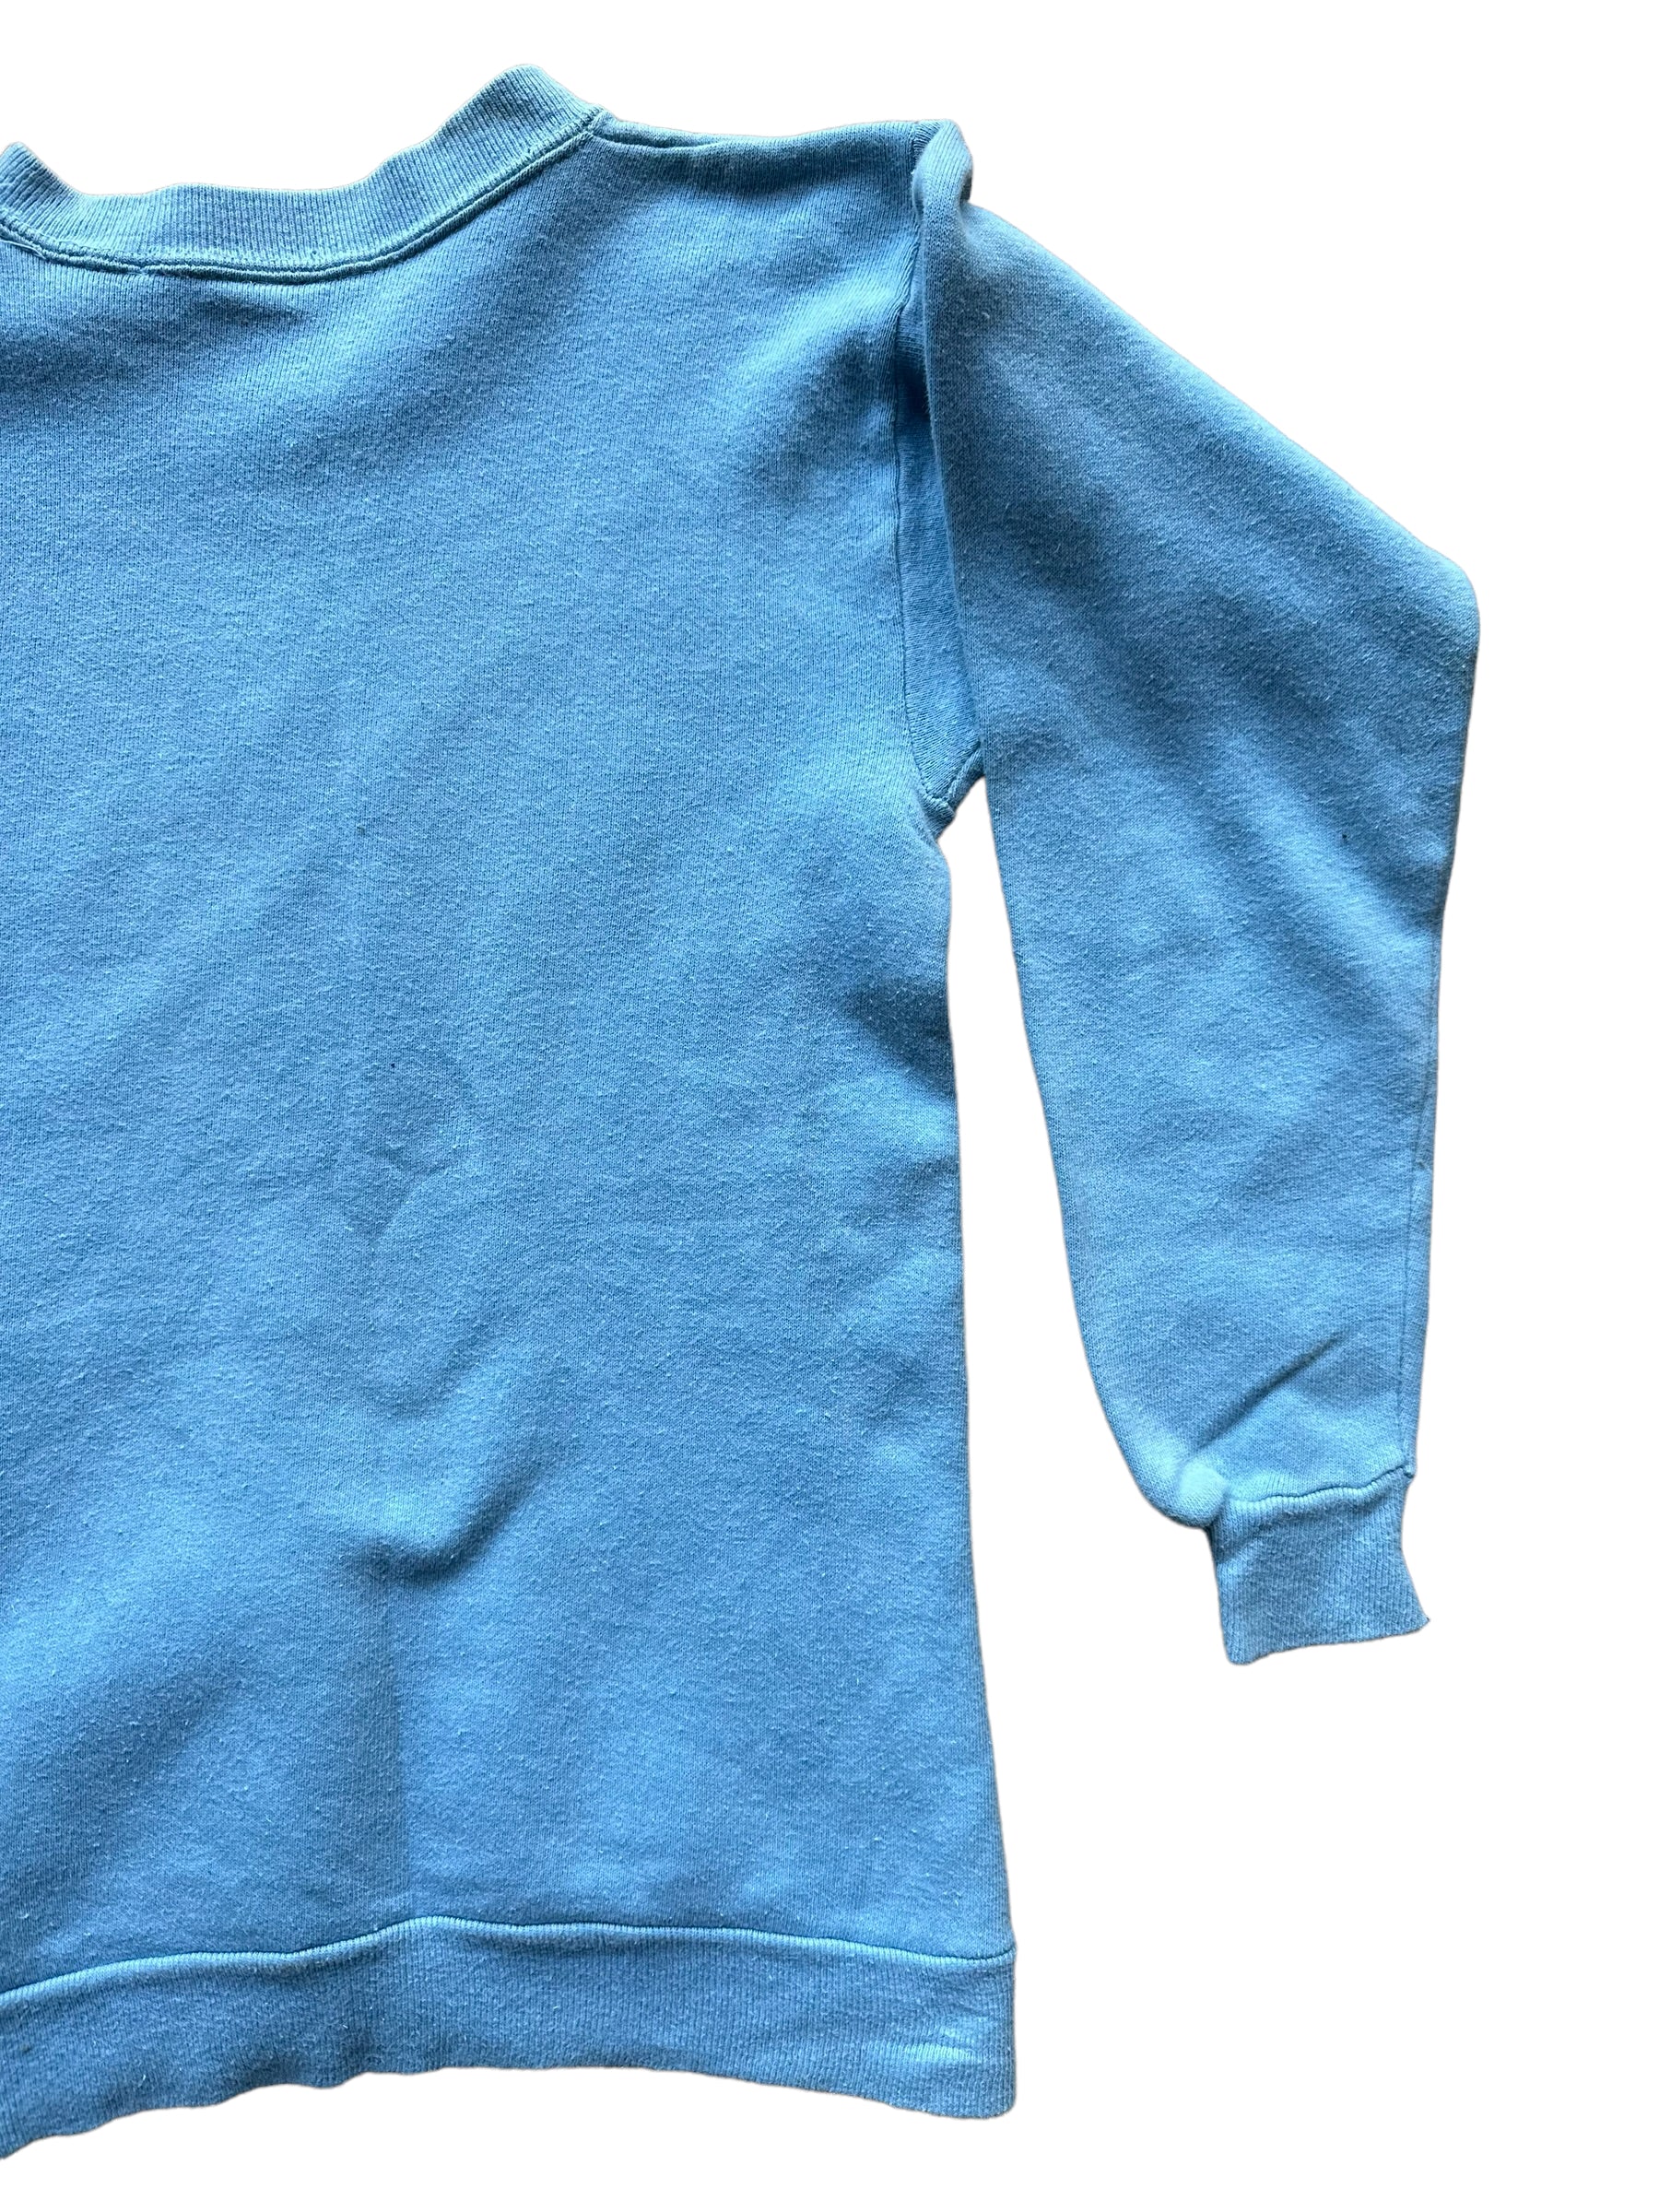 Right Rear View on Vintage Bemidji Crewneck Sweatshirt |  Seattle Vintage Workwear